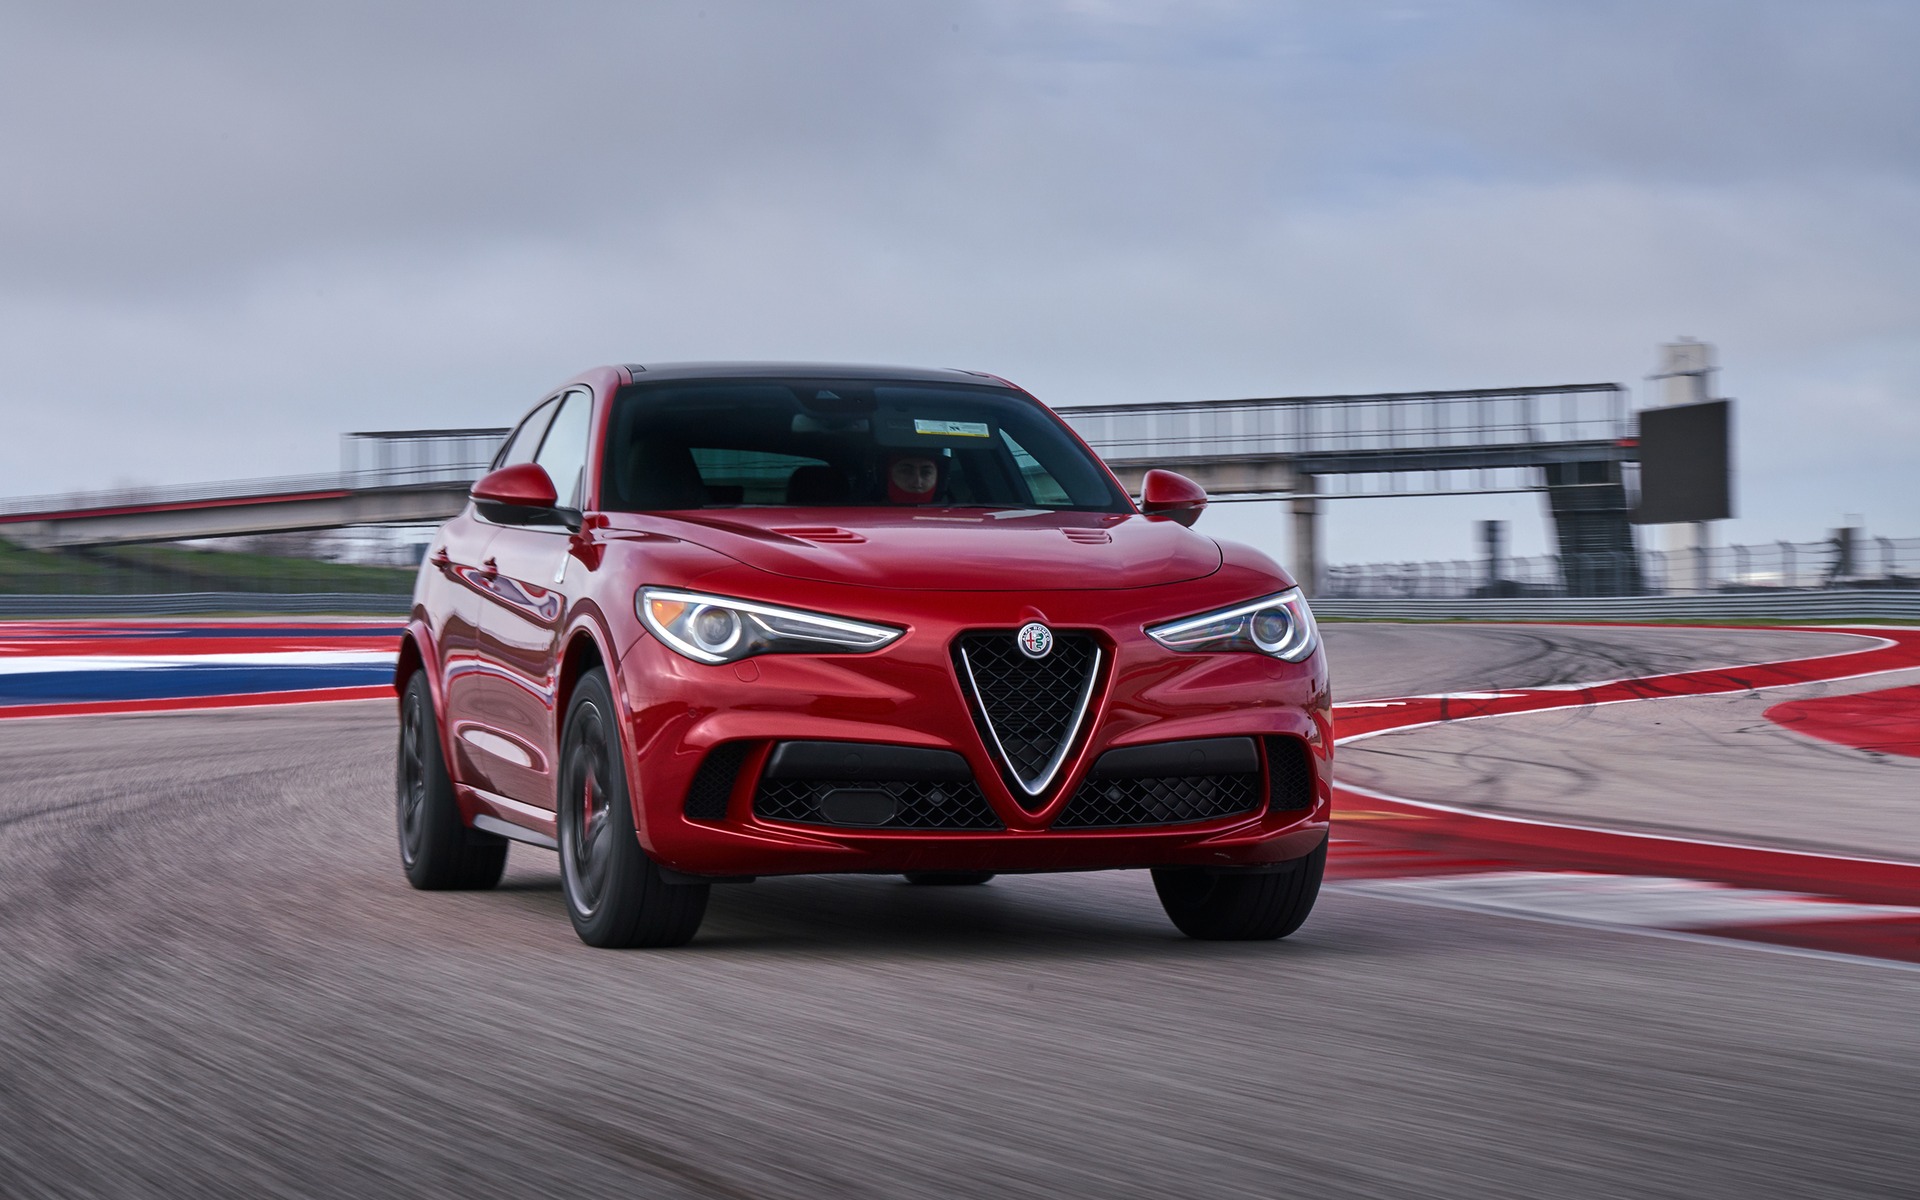 Alfa Romeo Giulia, Stelvio to Key Upgrades 2020 - The Car Guide